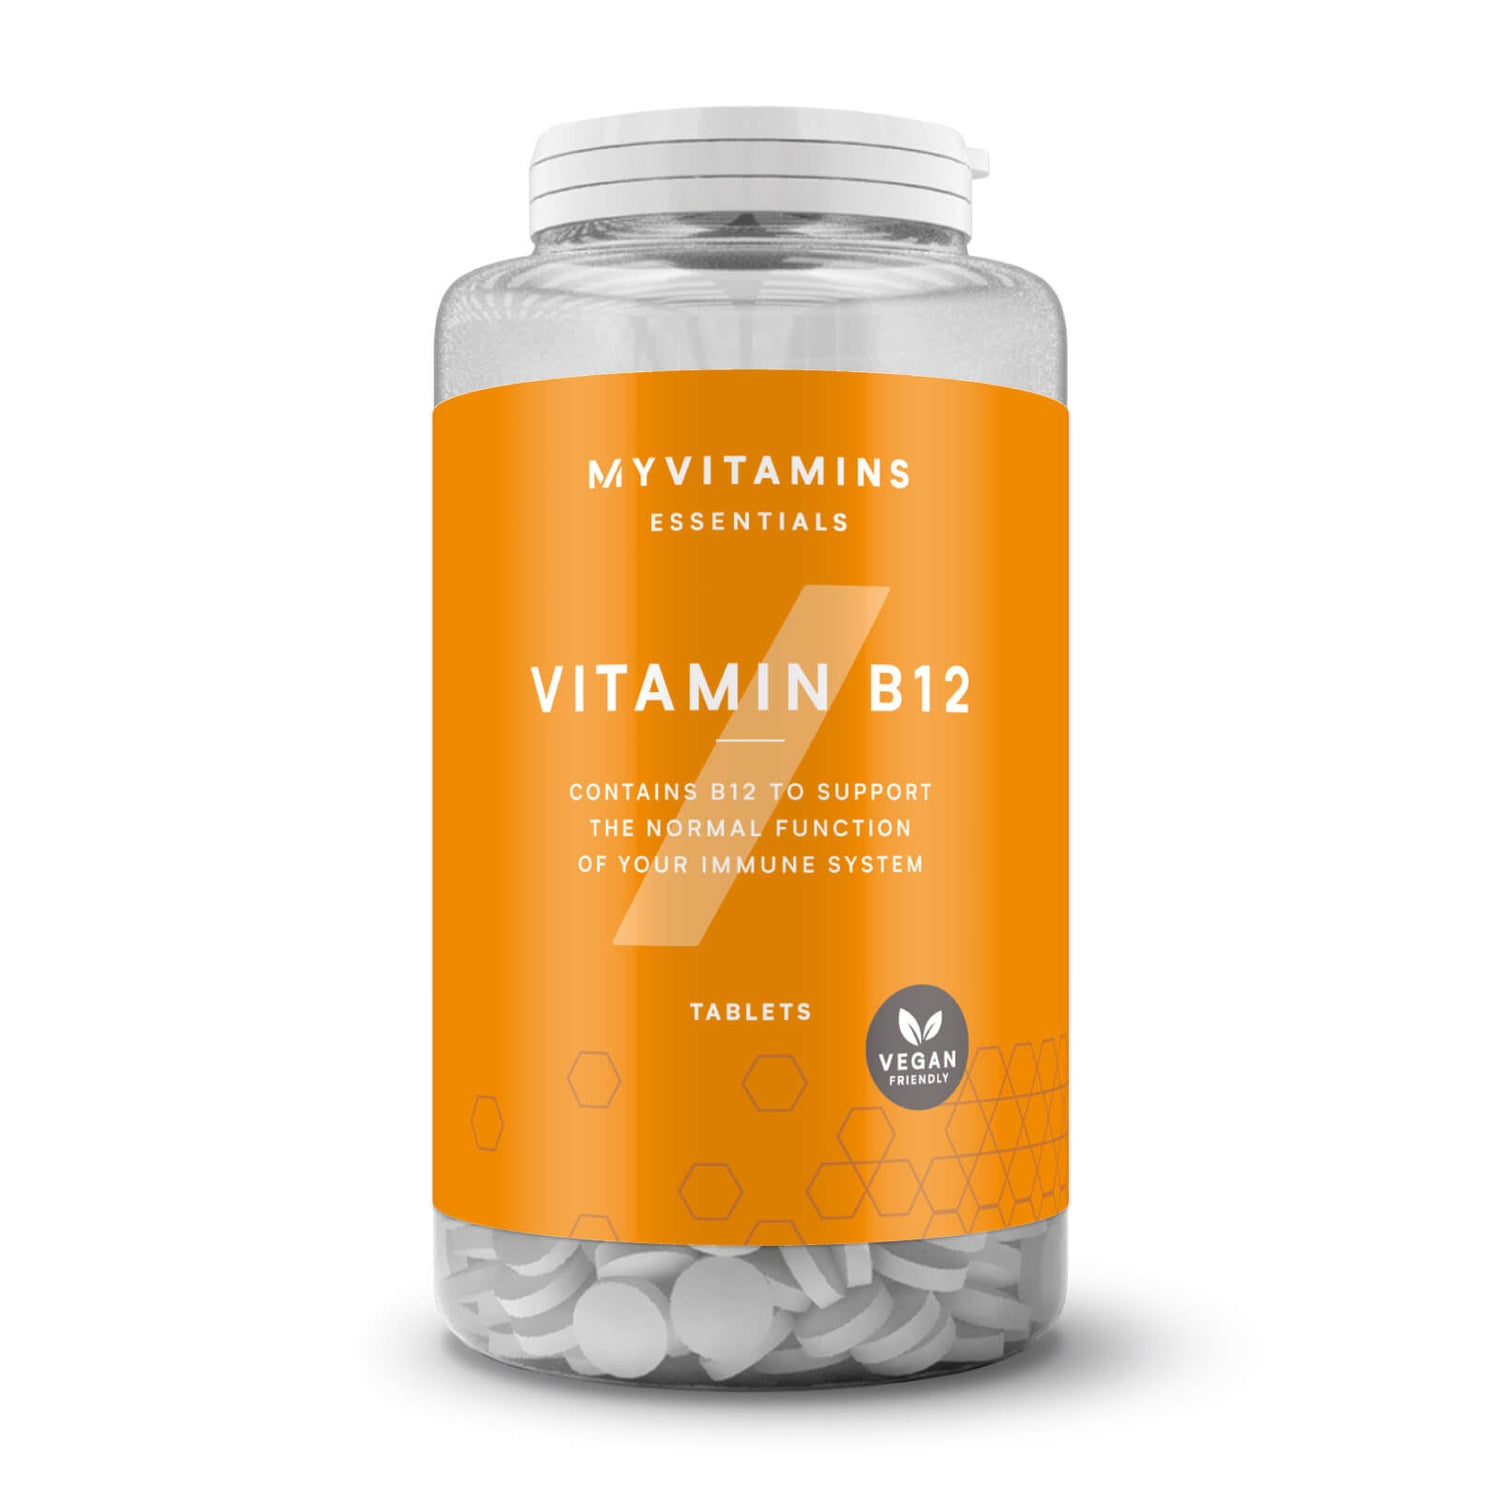 Myvitamins Vitamin B12 Tablets (CEE) - 180tablets